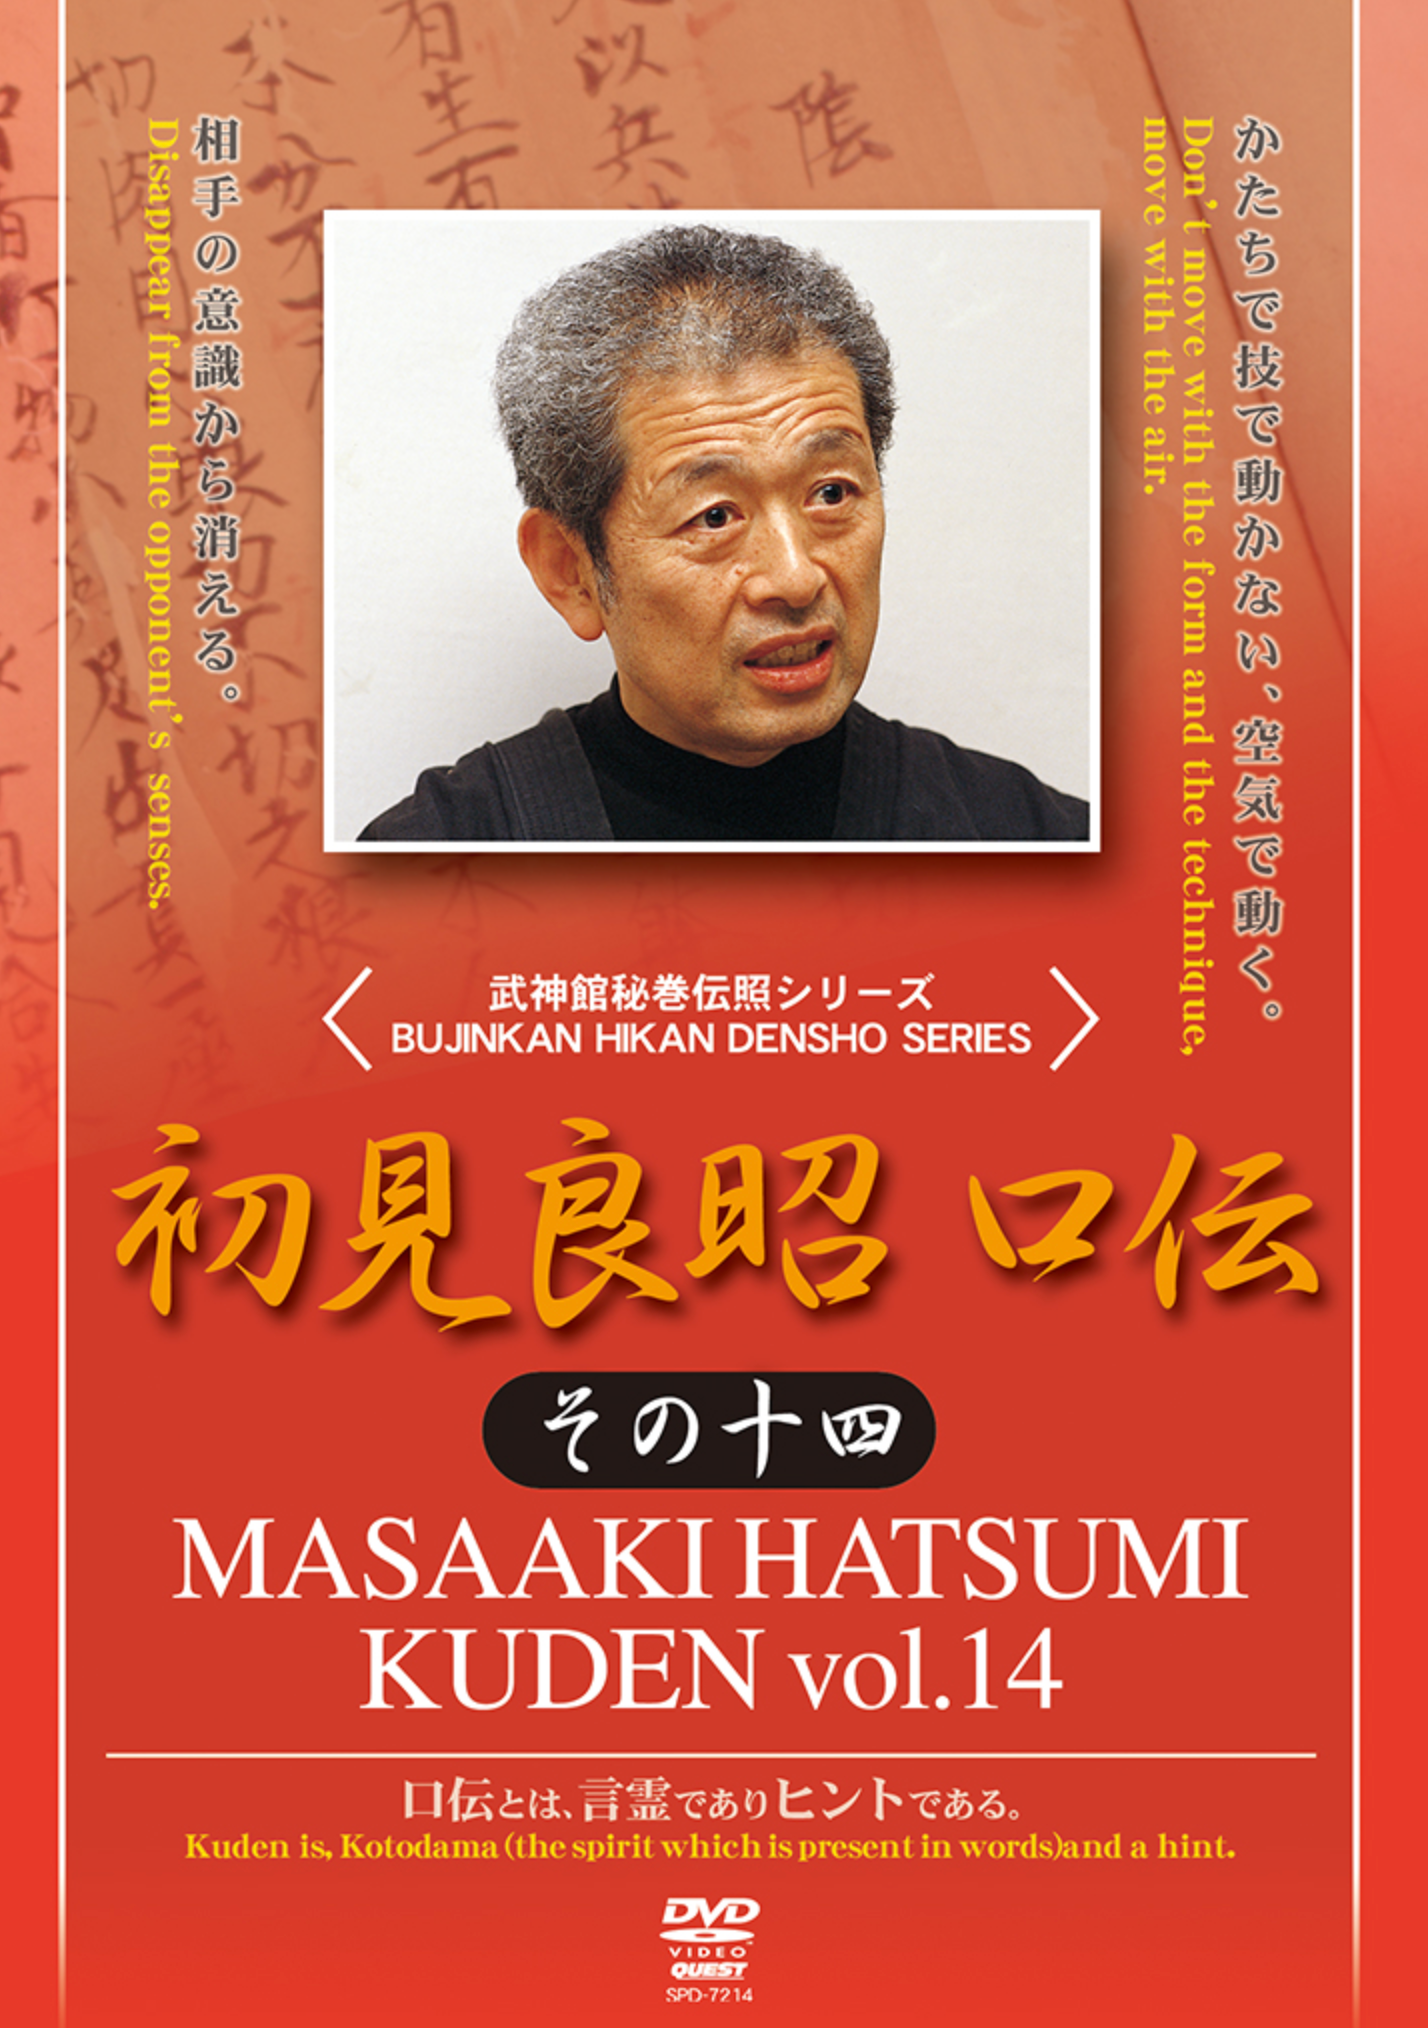 Kuden Vol 14 DVD with Masaaki Hatsumi - Budovideos Inc